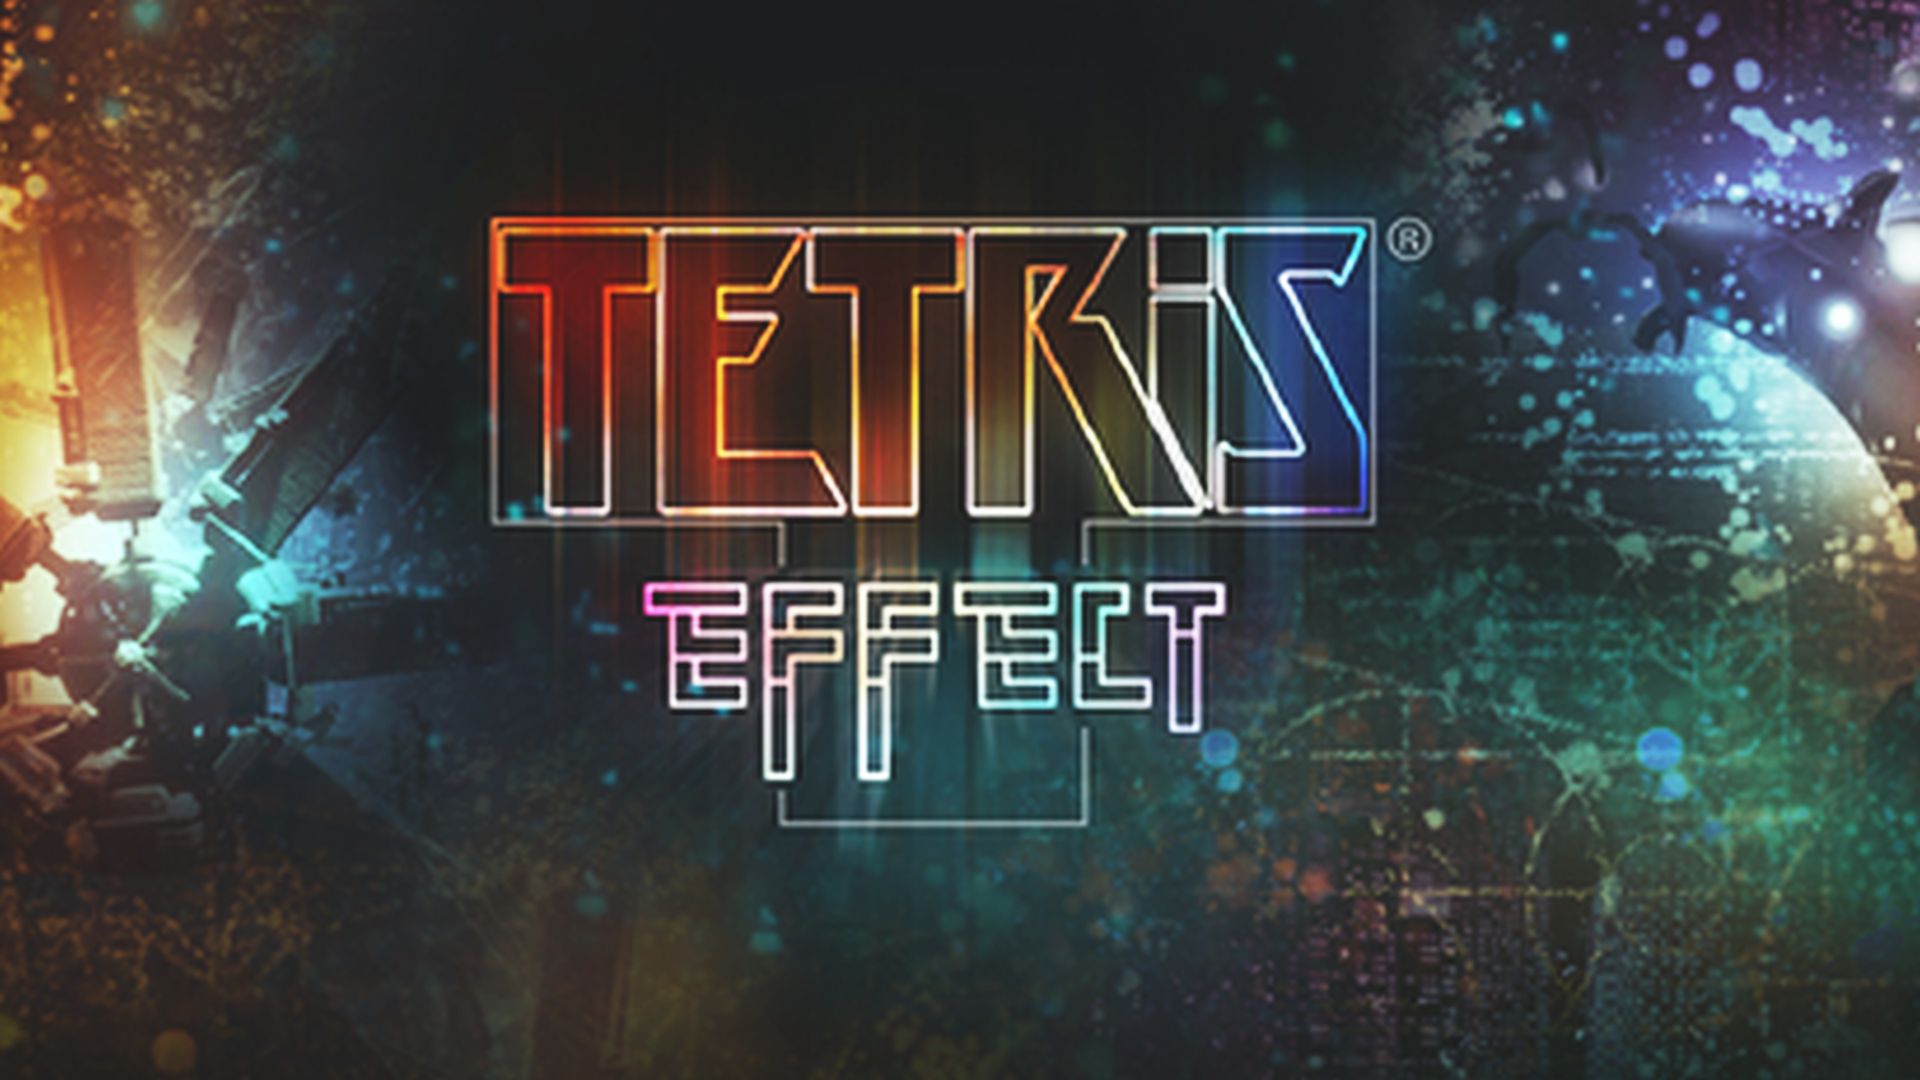 tetris effect vr pc